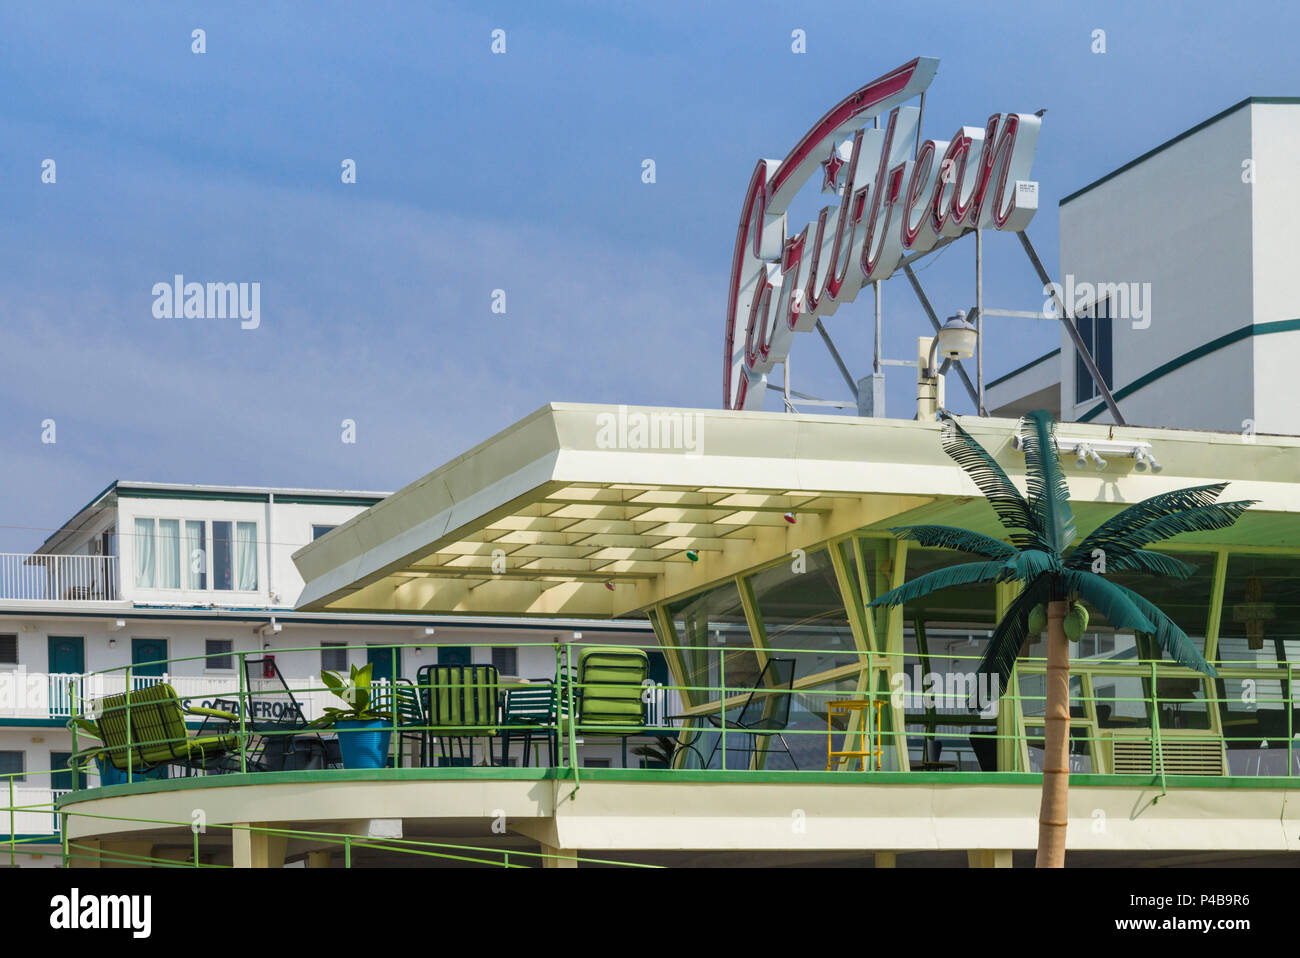 USA, New Jersey, The Jersey Shore, Wildwoods, 1950s-era Doo-Wop architecture, Caribbean Motel, neon sign Stock Photo